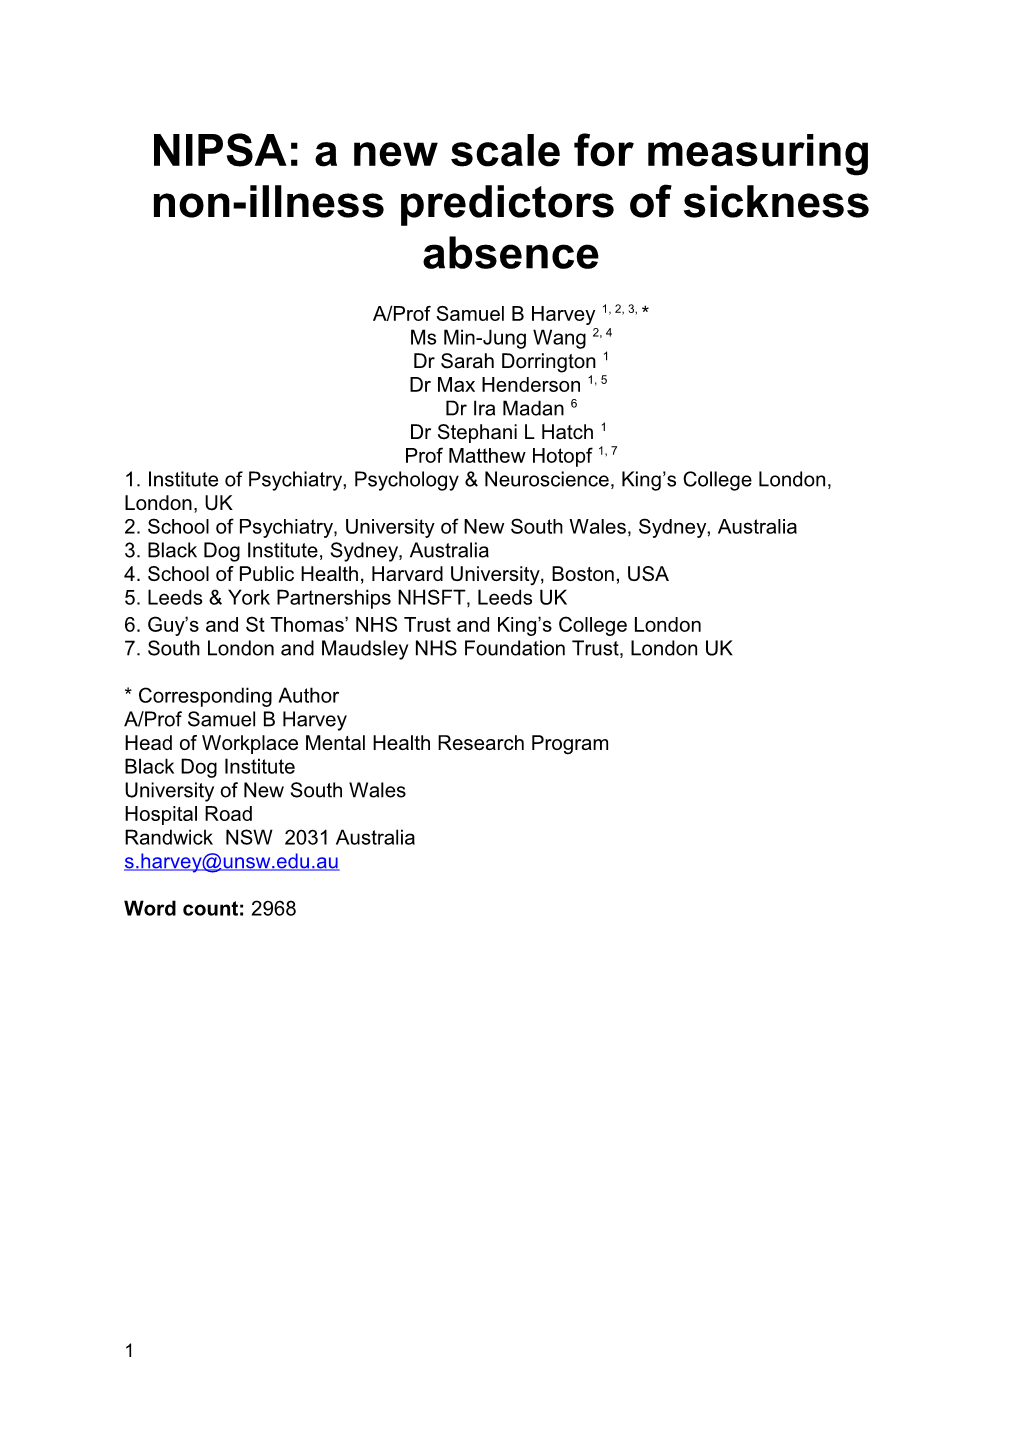 NIPSA: a New Scale for Measuring Non-Illness Predictors of Sickness Absence